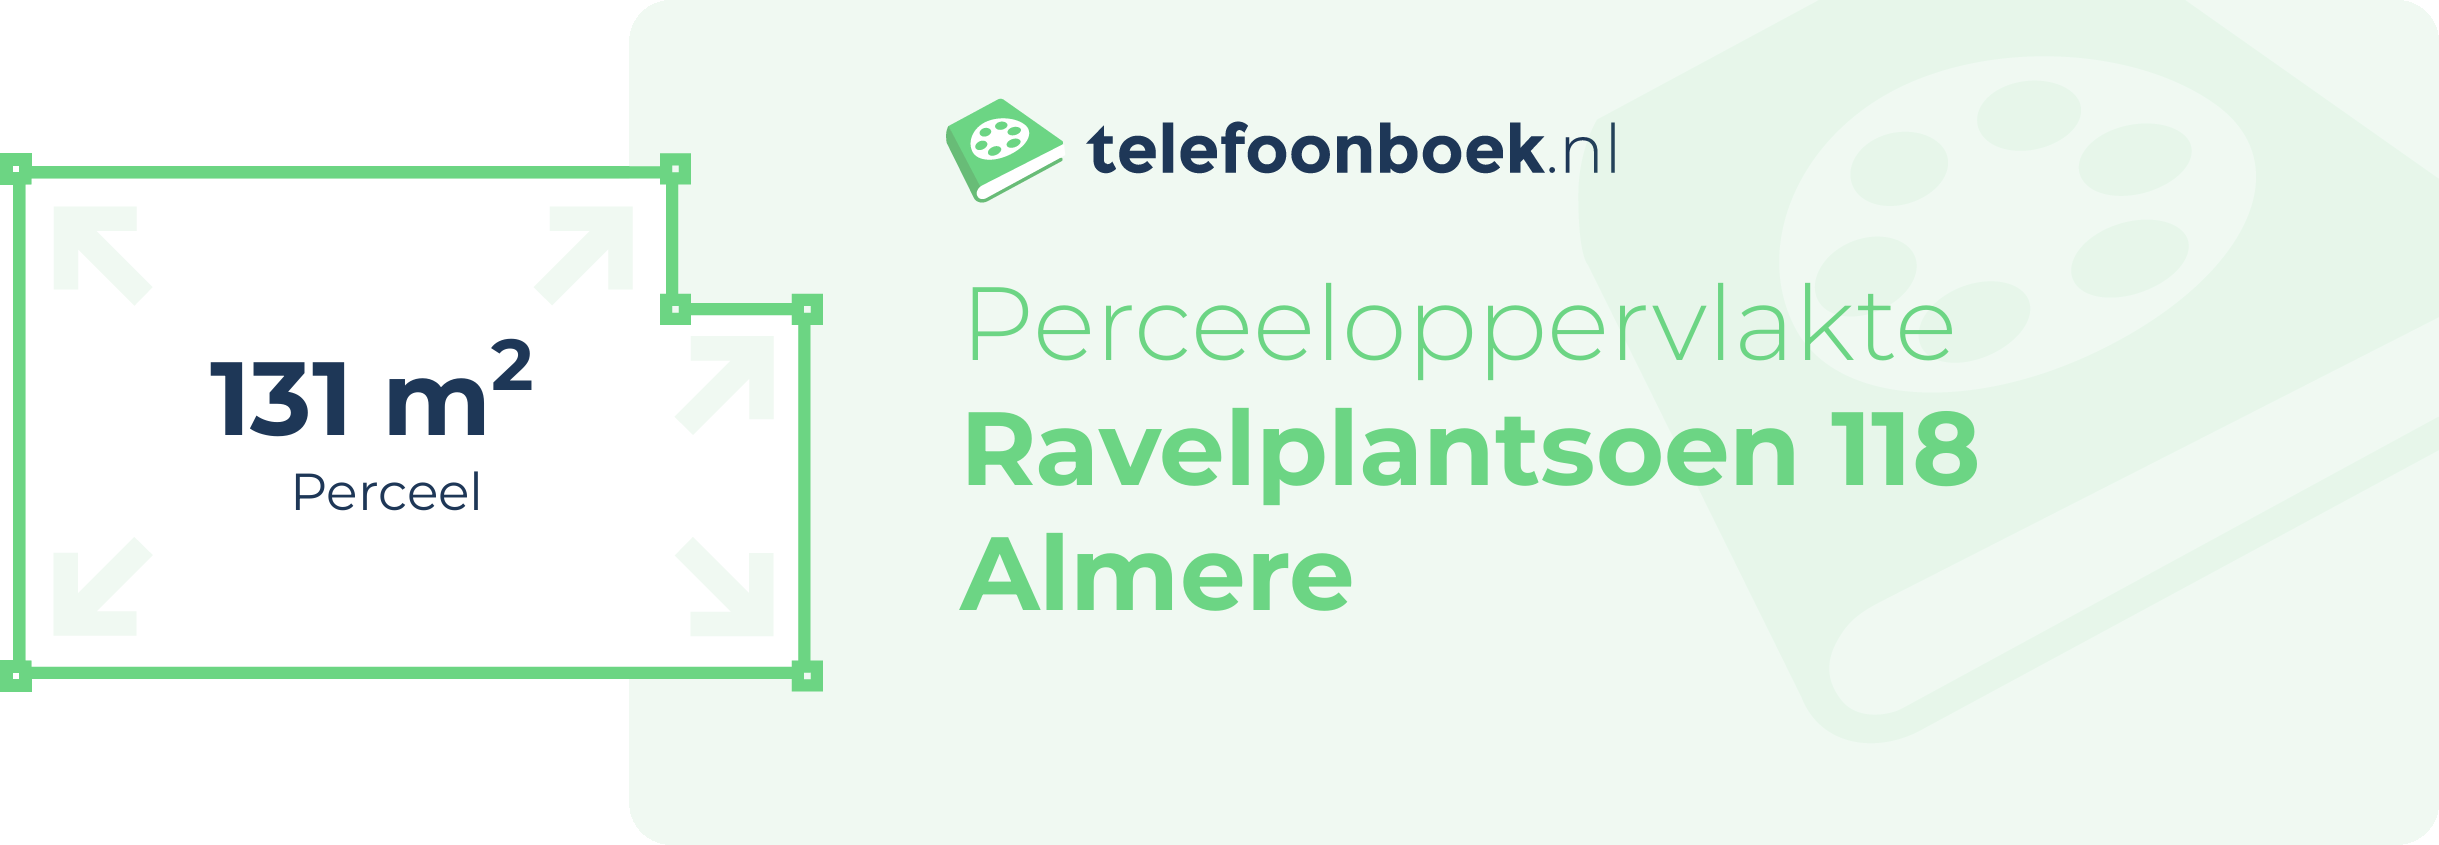 Perceeloppervlakte Ravelplantsoen 118 Almere